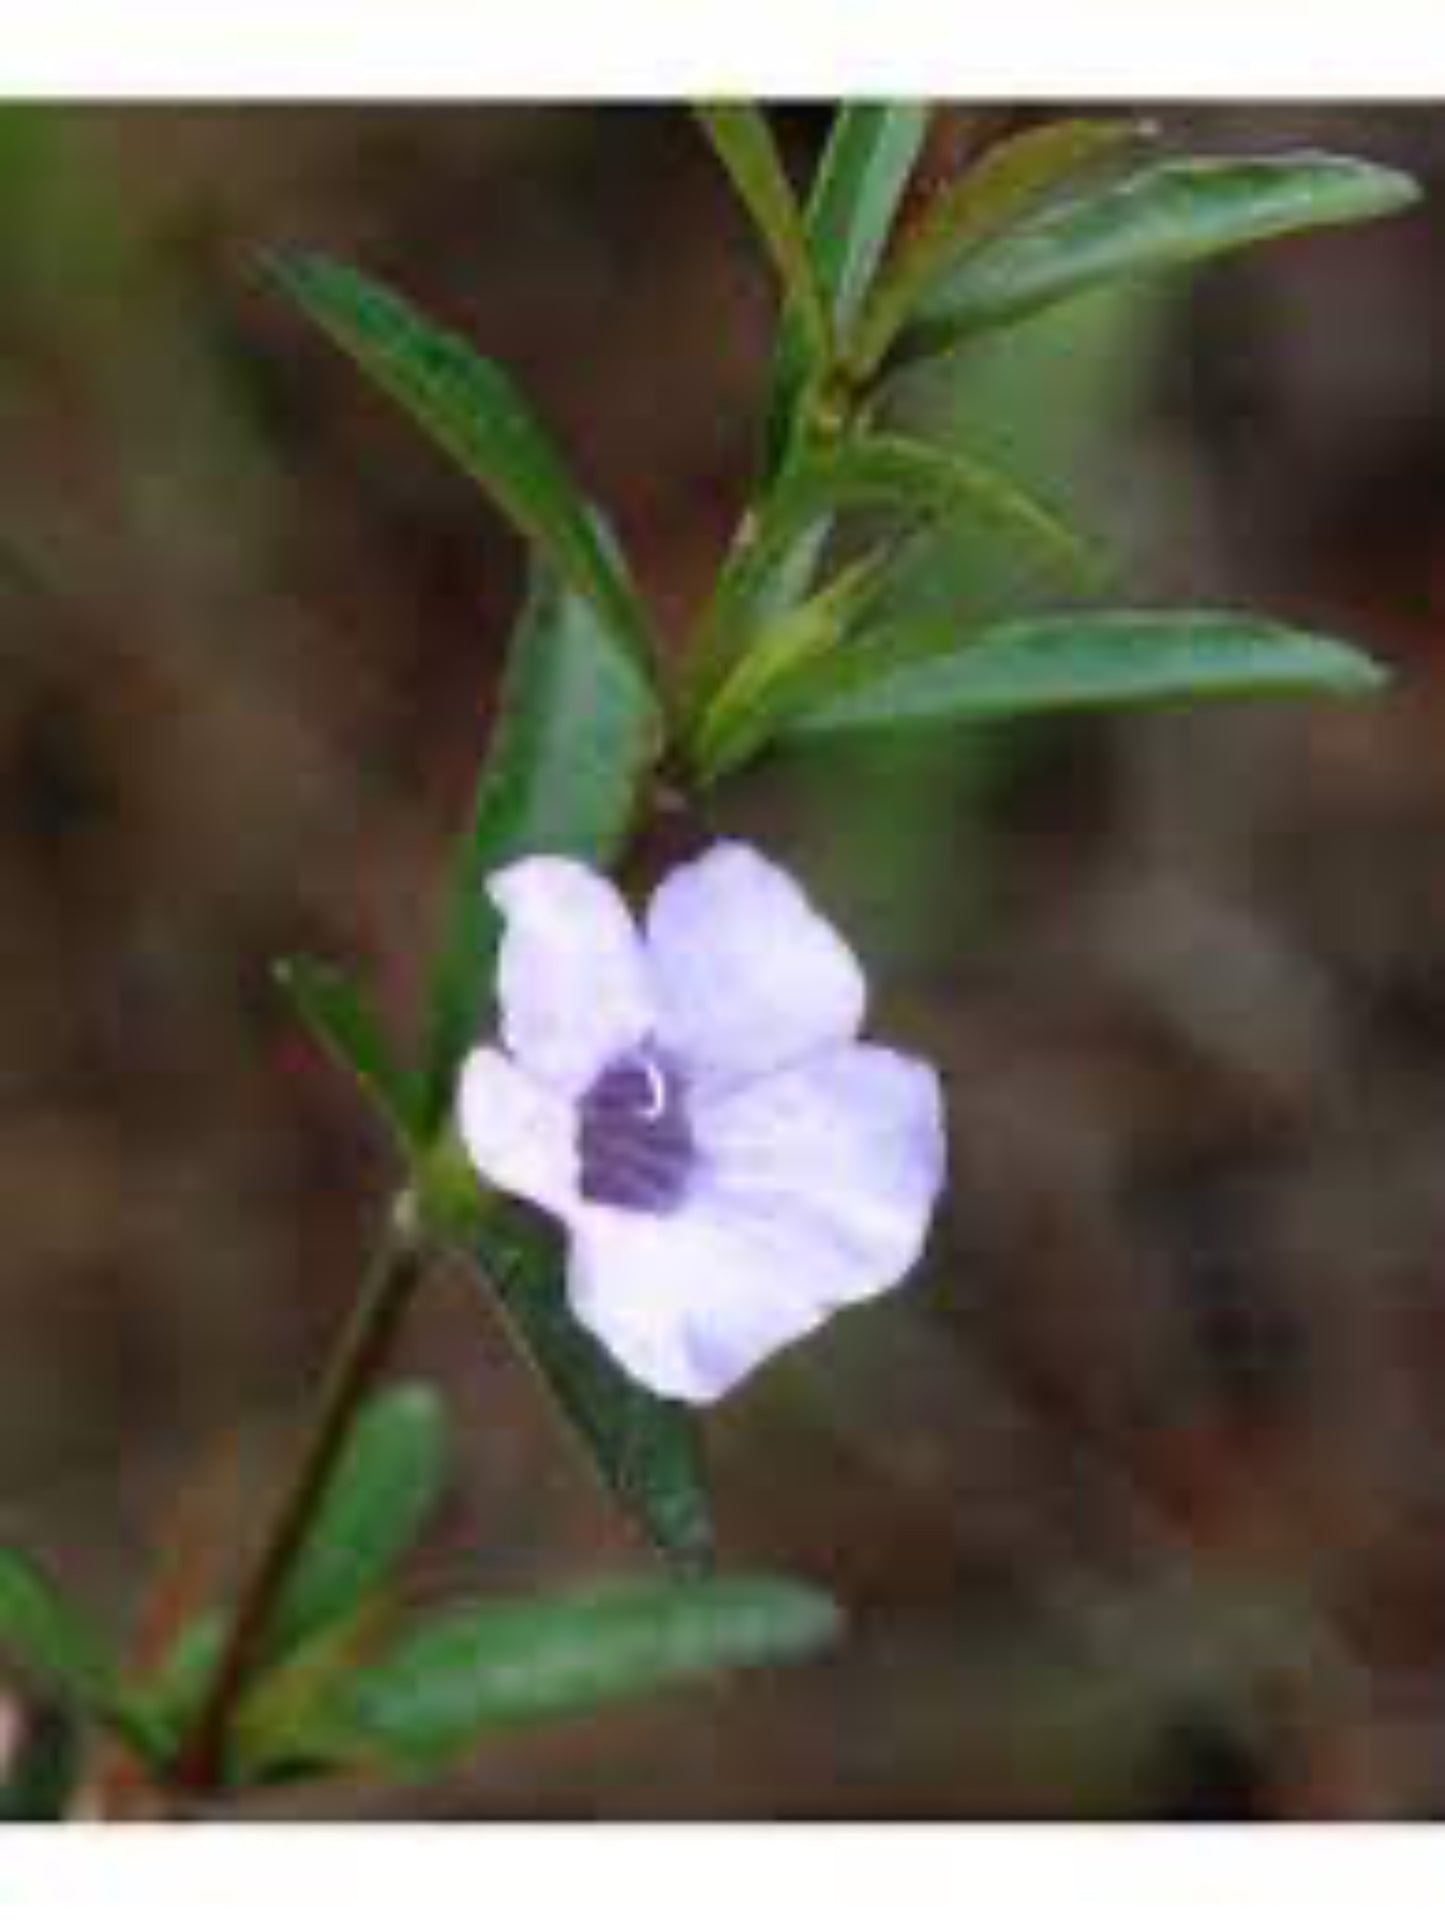 dyschoriste humistrata "swamp twinflower" flower is the host plant for Buckeye butterfly ( Junonia Coenia )